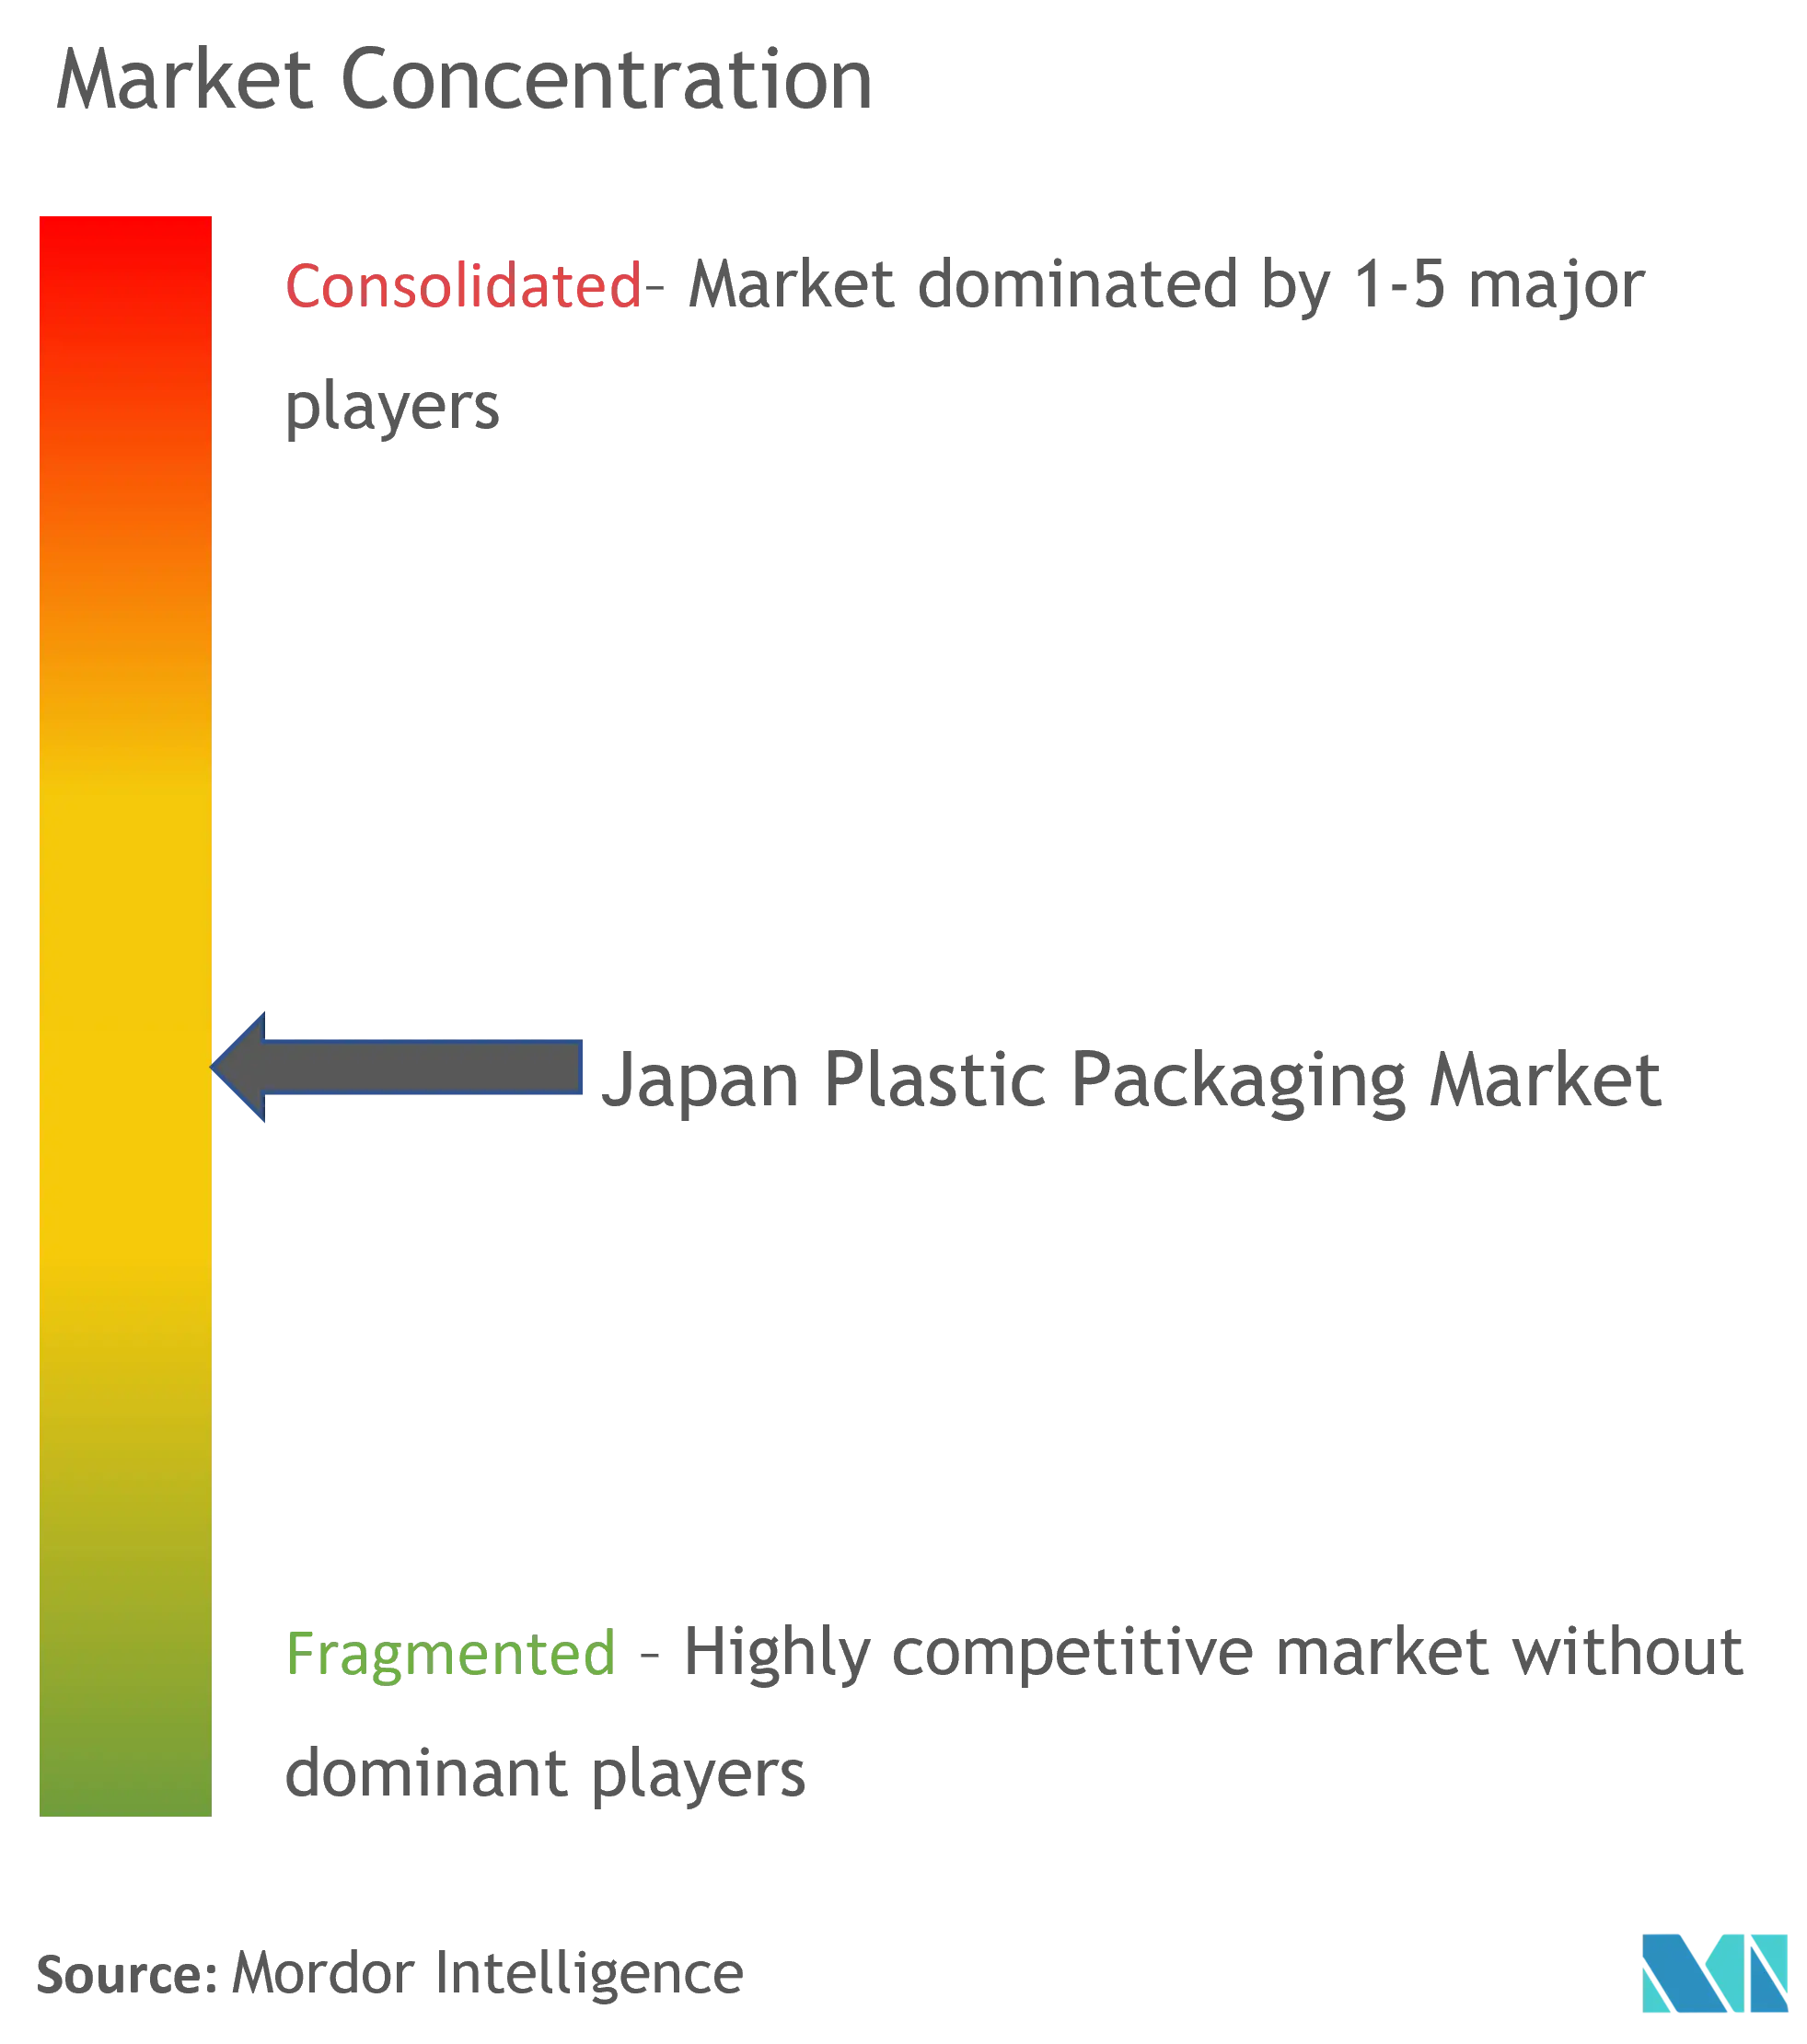 Japan Plastic Packaging Market Concentration